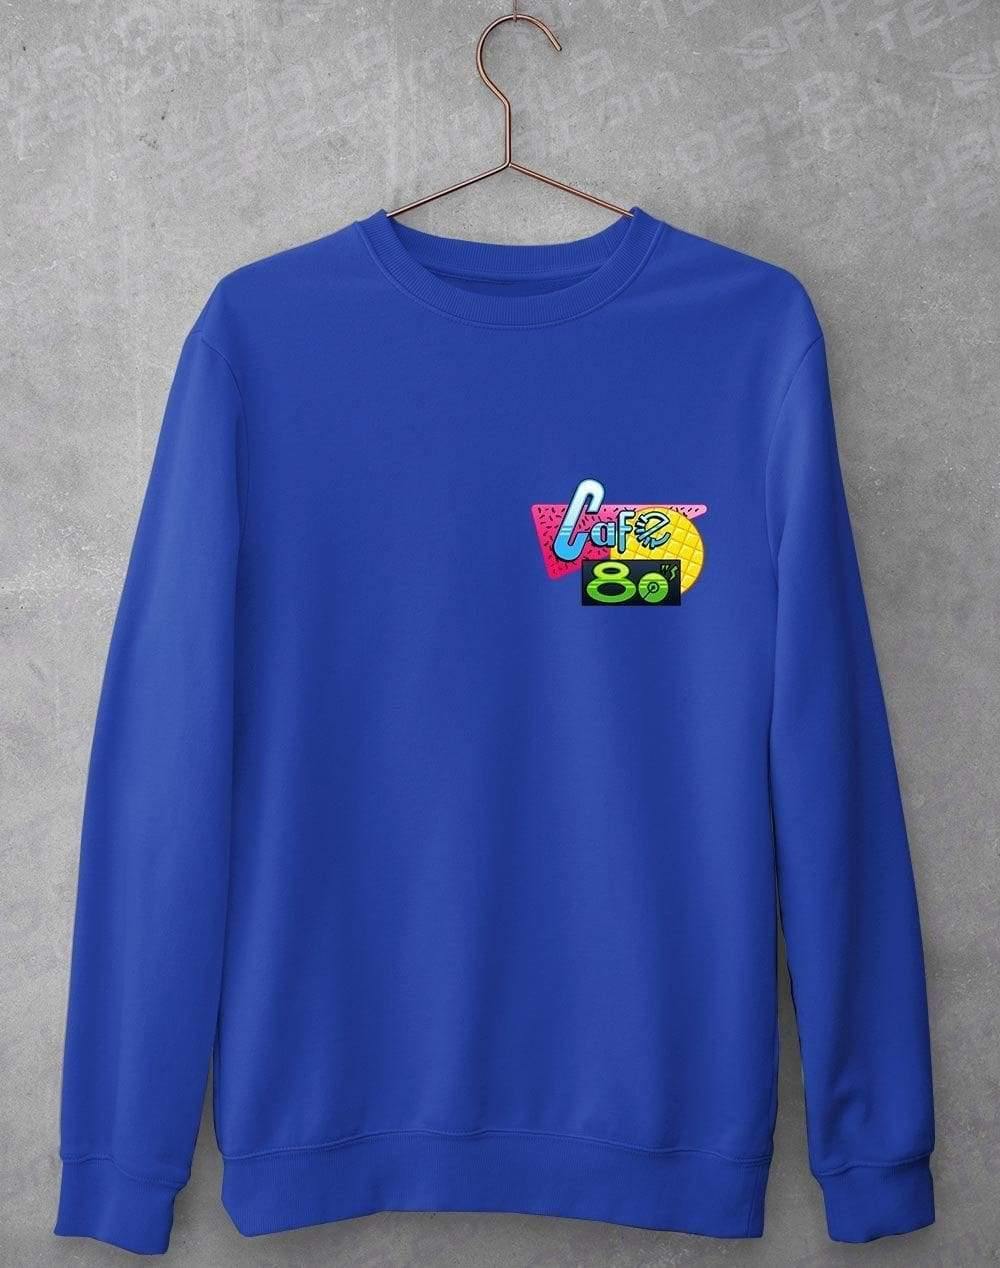 Cafe 80s Pocket Print Sweatshirt S / Royal Blue  - Off World Tees